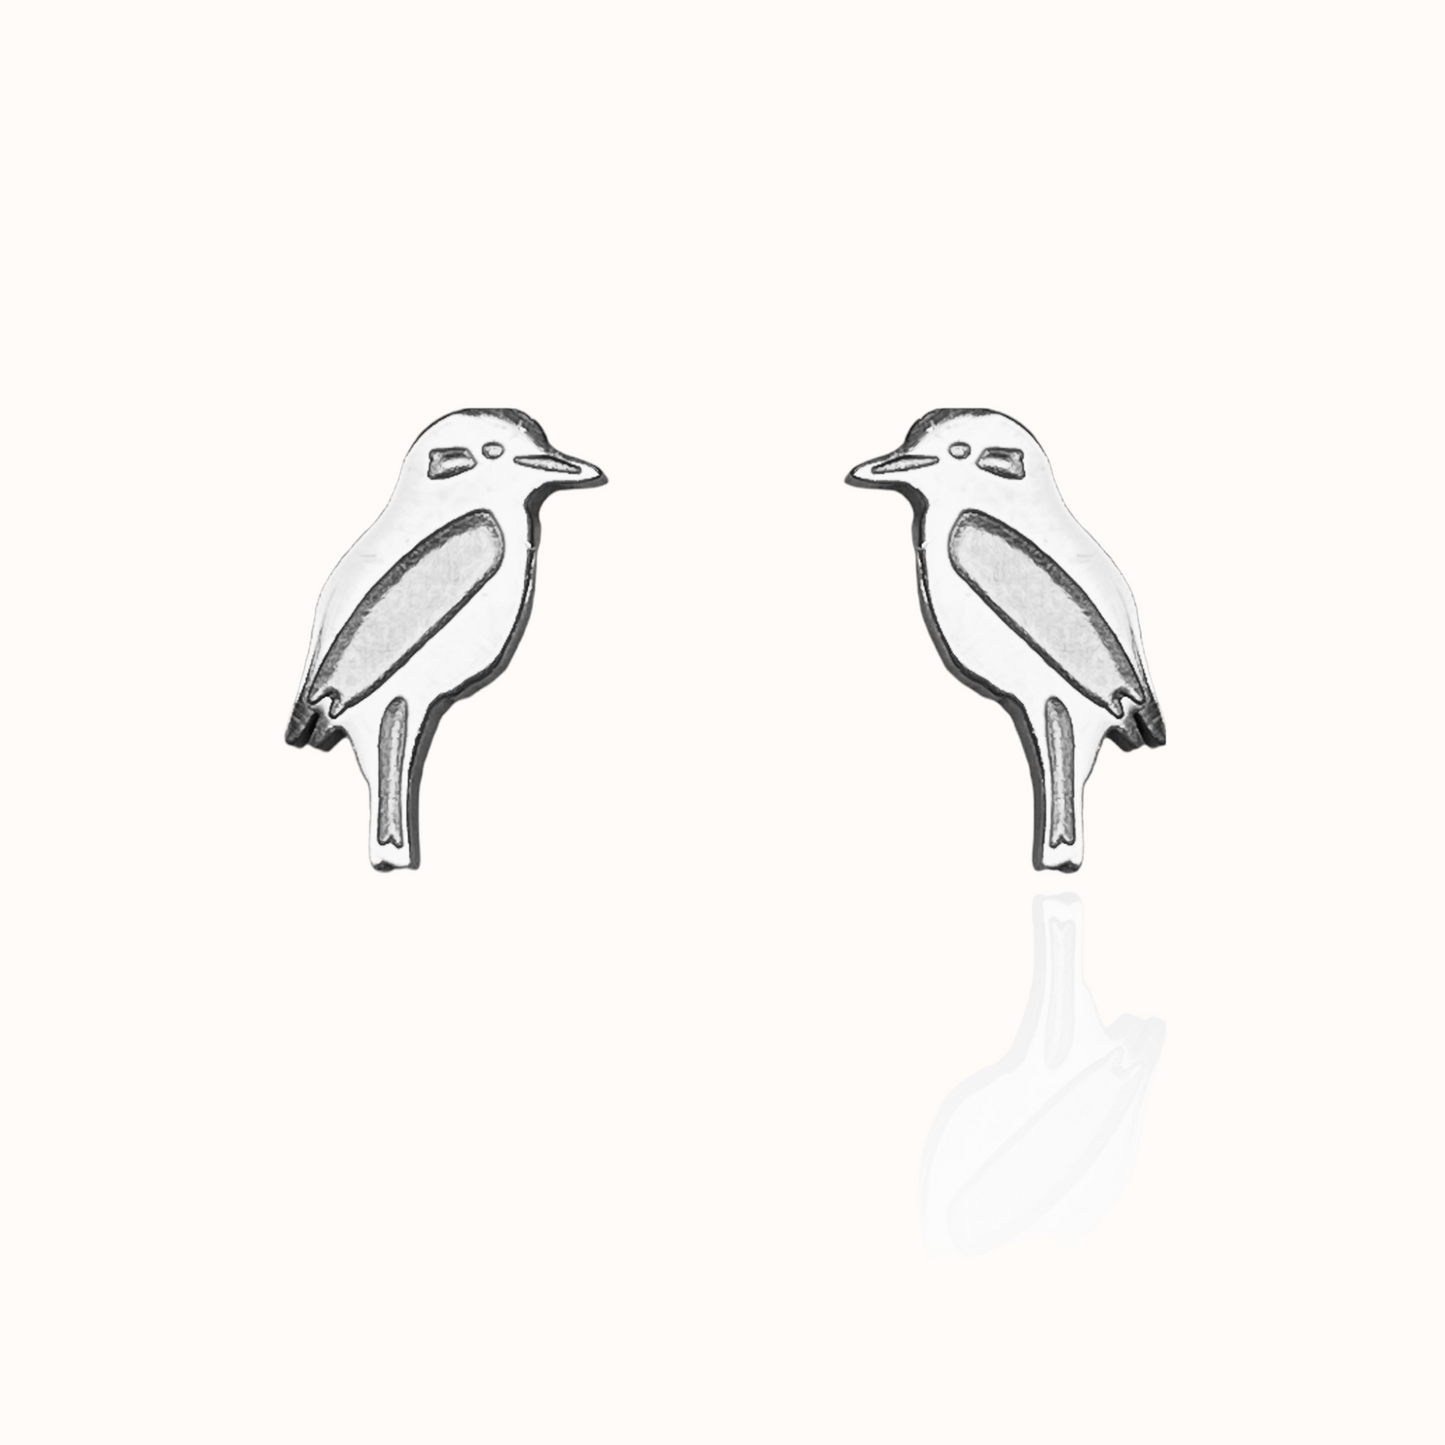 Kookaburra Earring Studs Silver